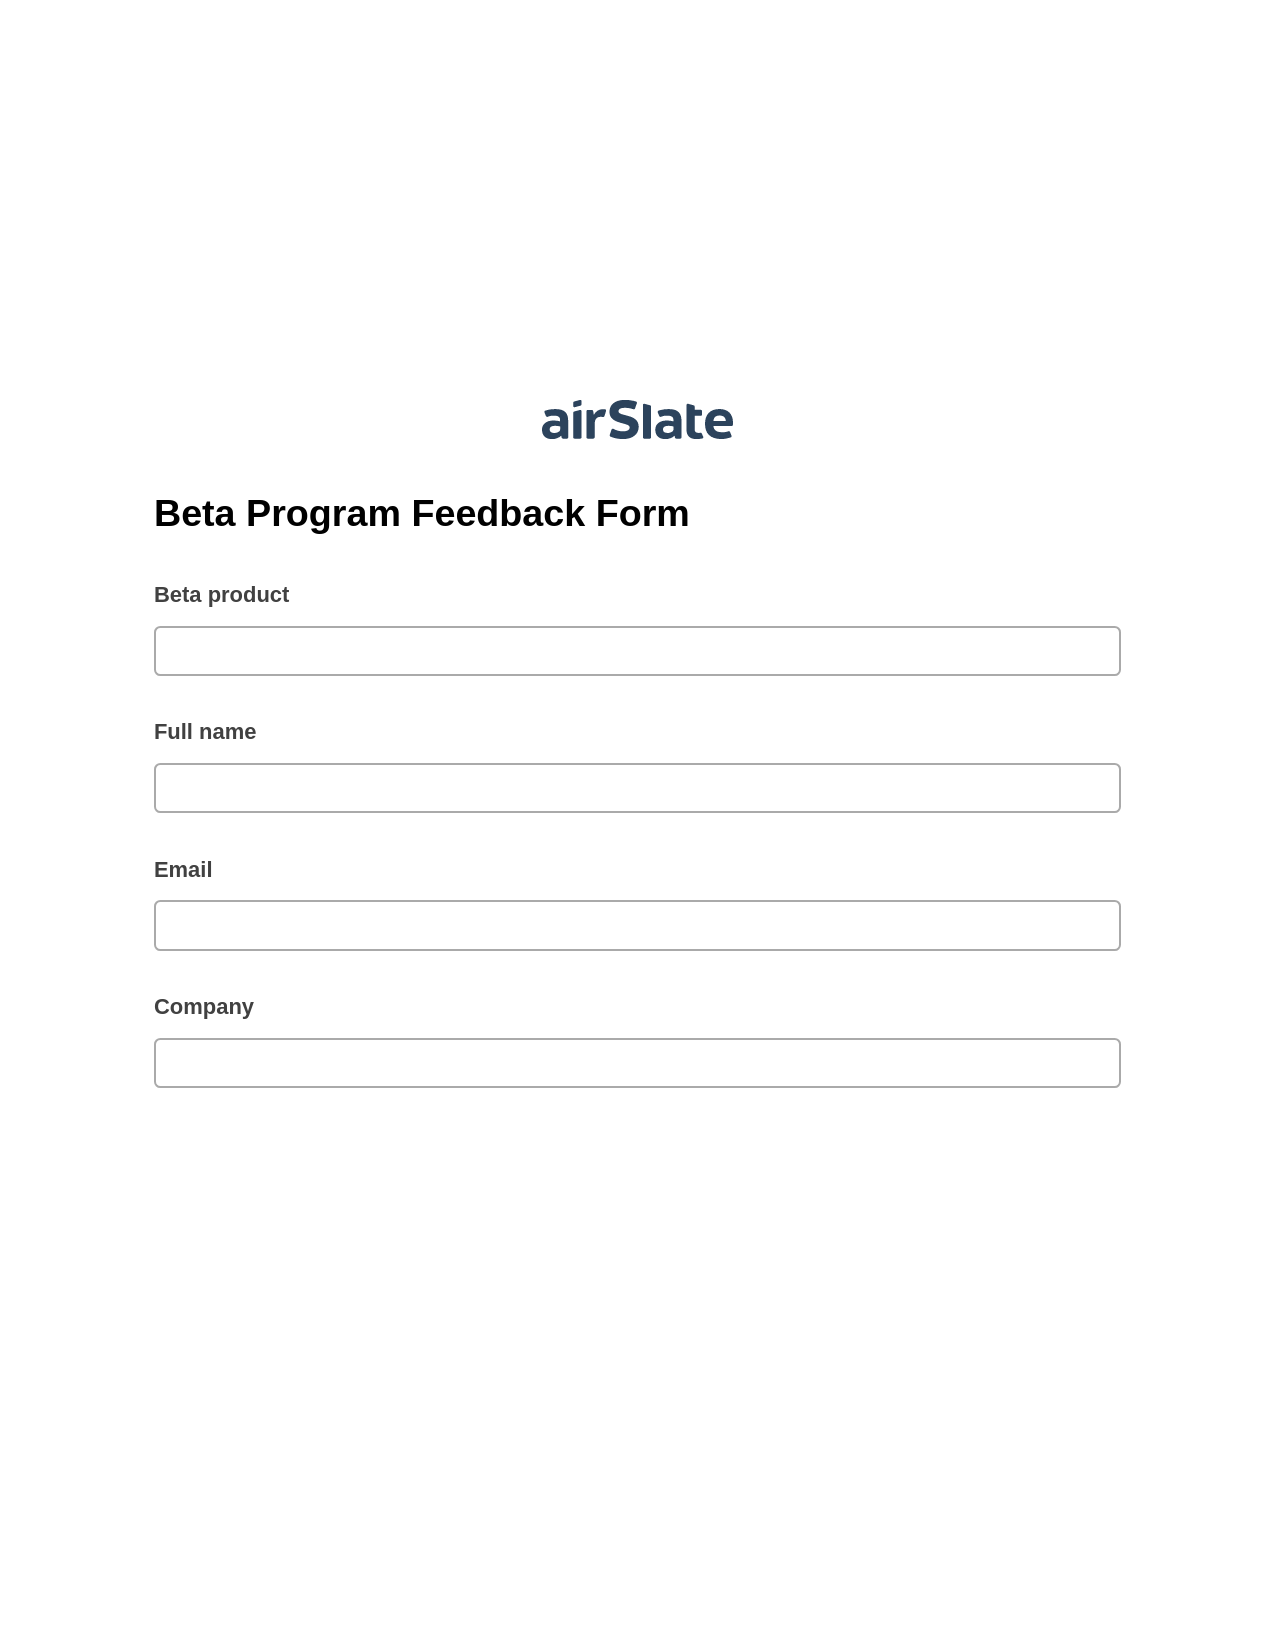 Multirole Beta Program Feedback Form Pre-fill Slate from MS Dynamics 365 Records Bot, Add Tags to Slate Bot, Slack Notification Postfinish Bot